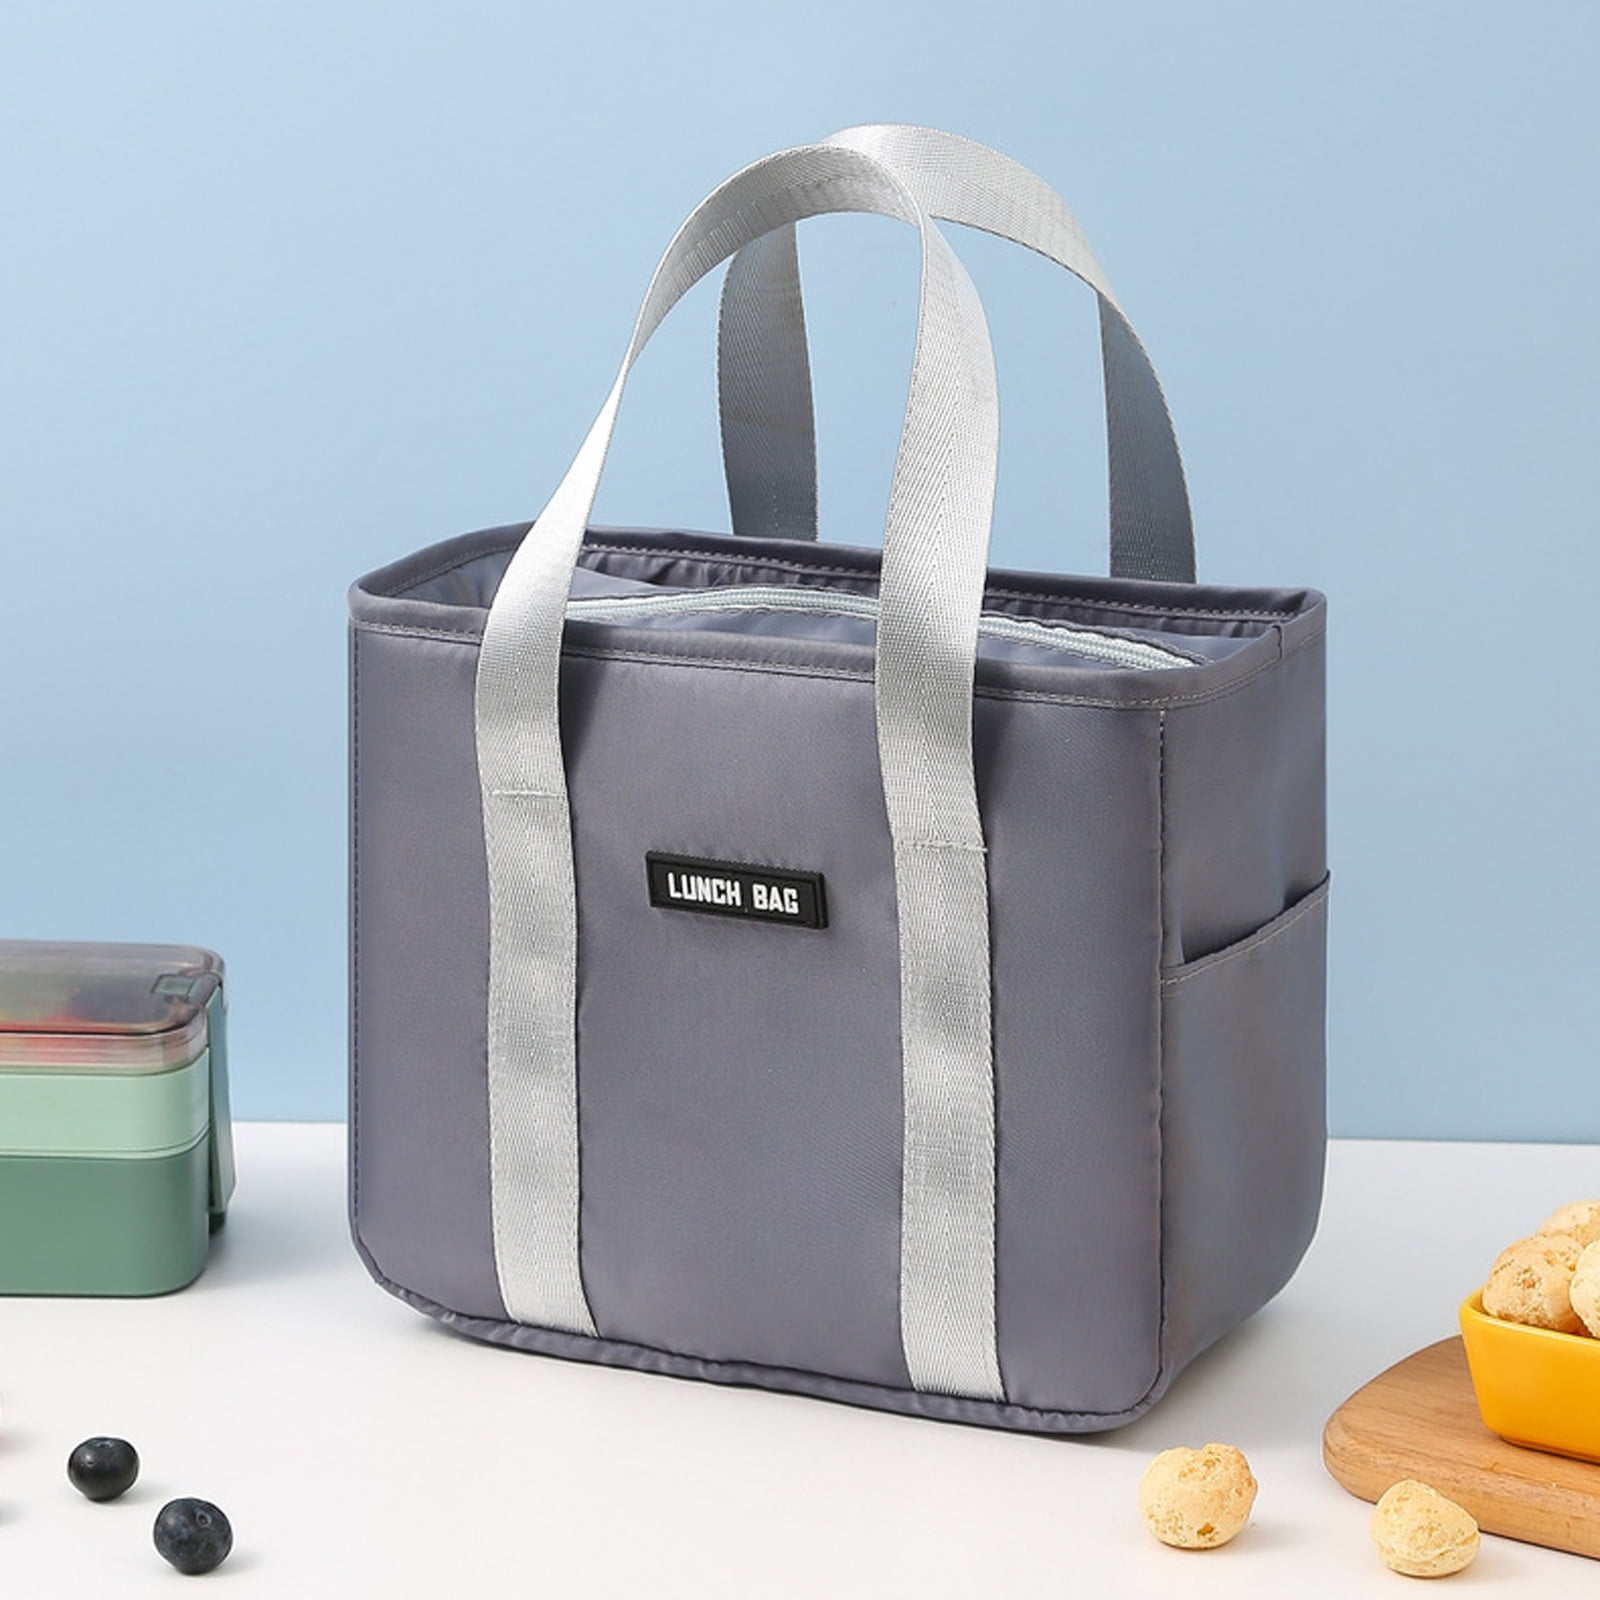 NEWFOM Lunch Box for Men/Women,Insulated Lunch Bag Cooler Bag,Leak